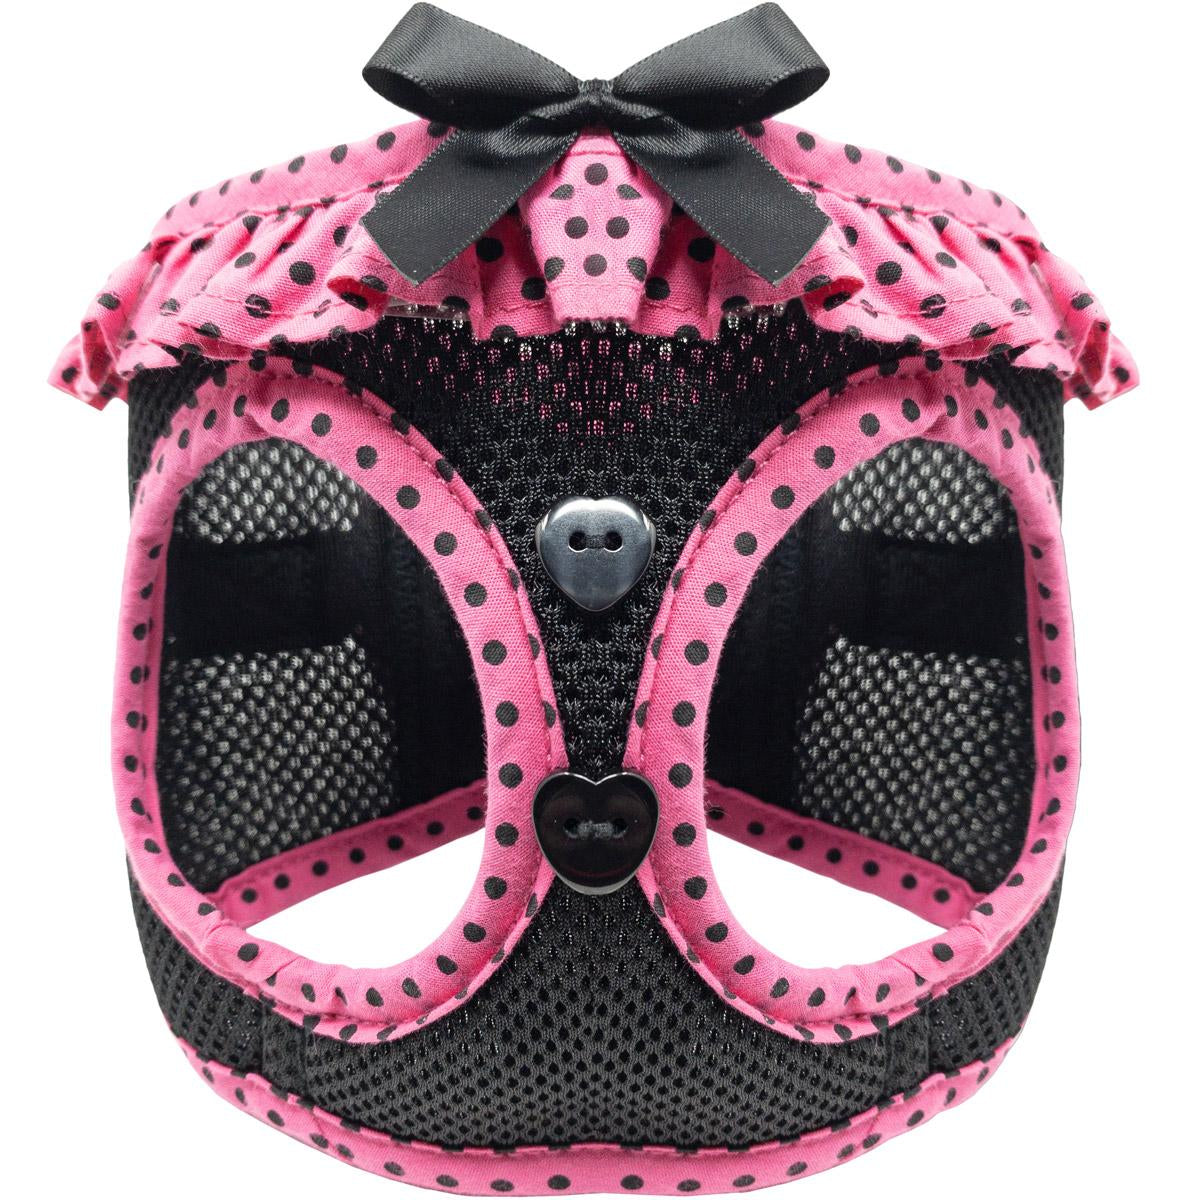 American River Choke Free Dog Harness Polka Dot Collection - Hot Pink and Black Polka Dot